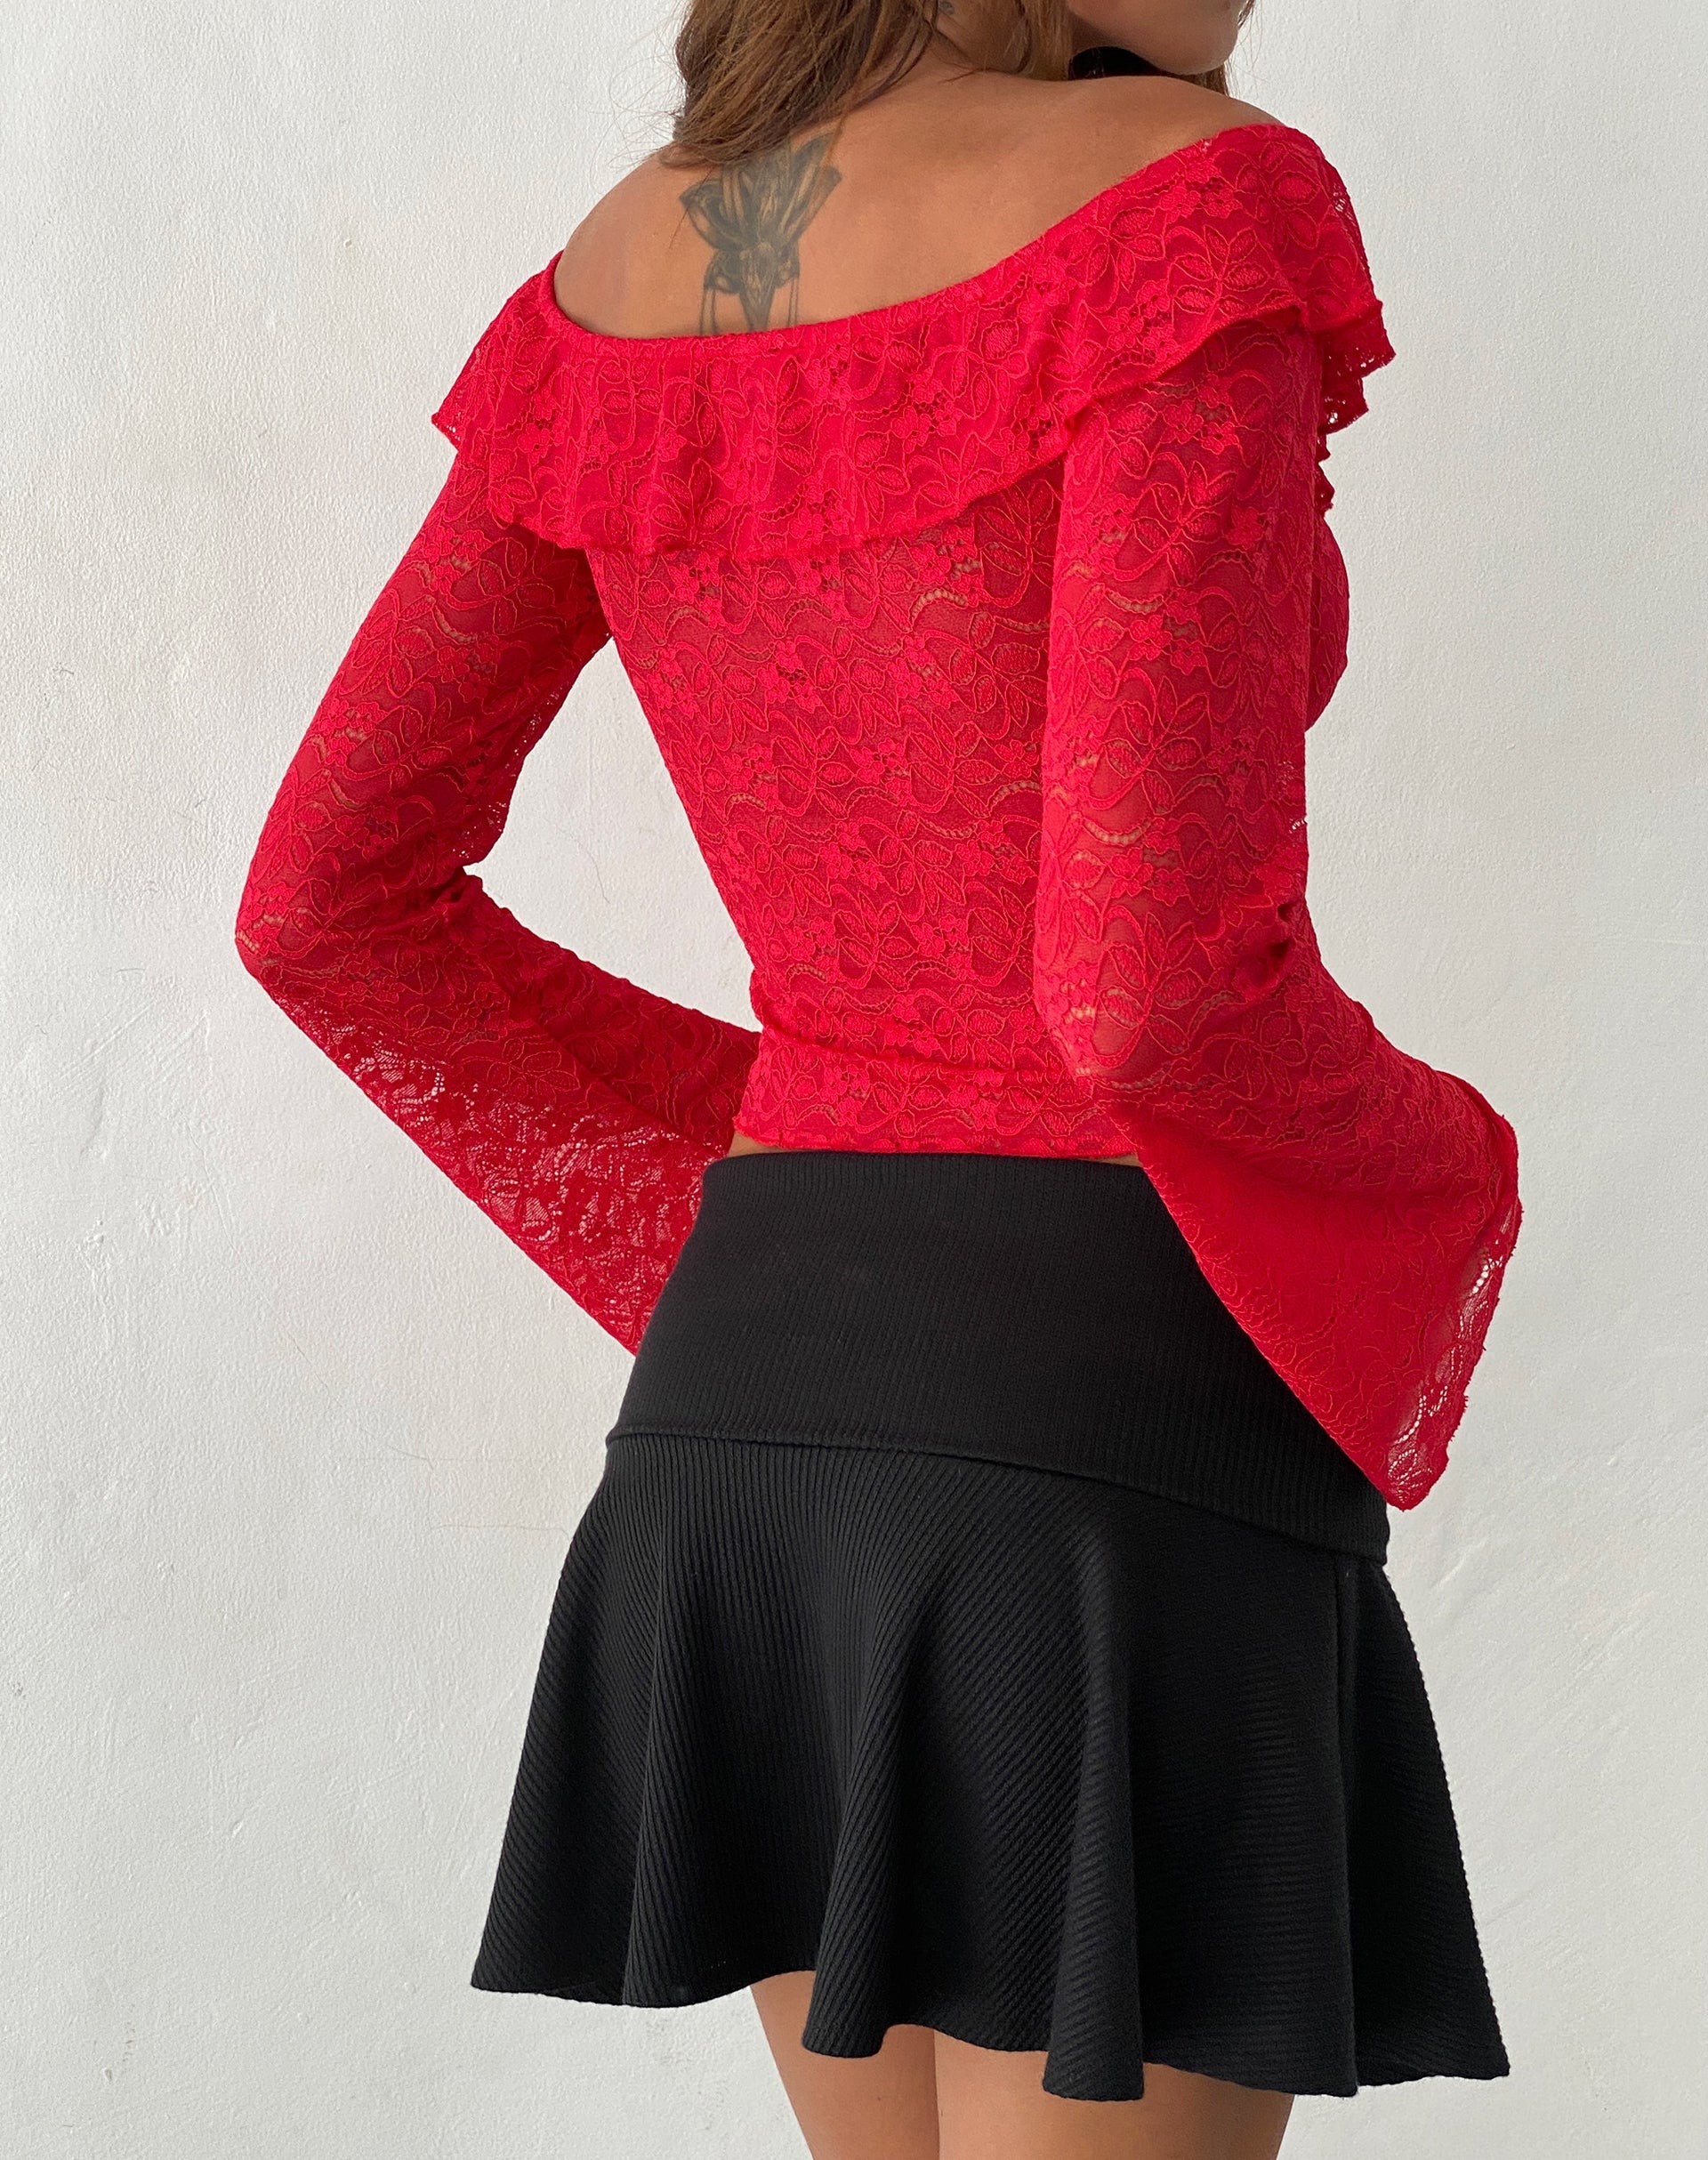 Image of Soka Bardot Frill Top in Red Lace